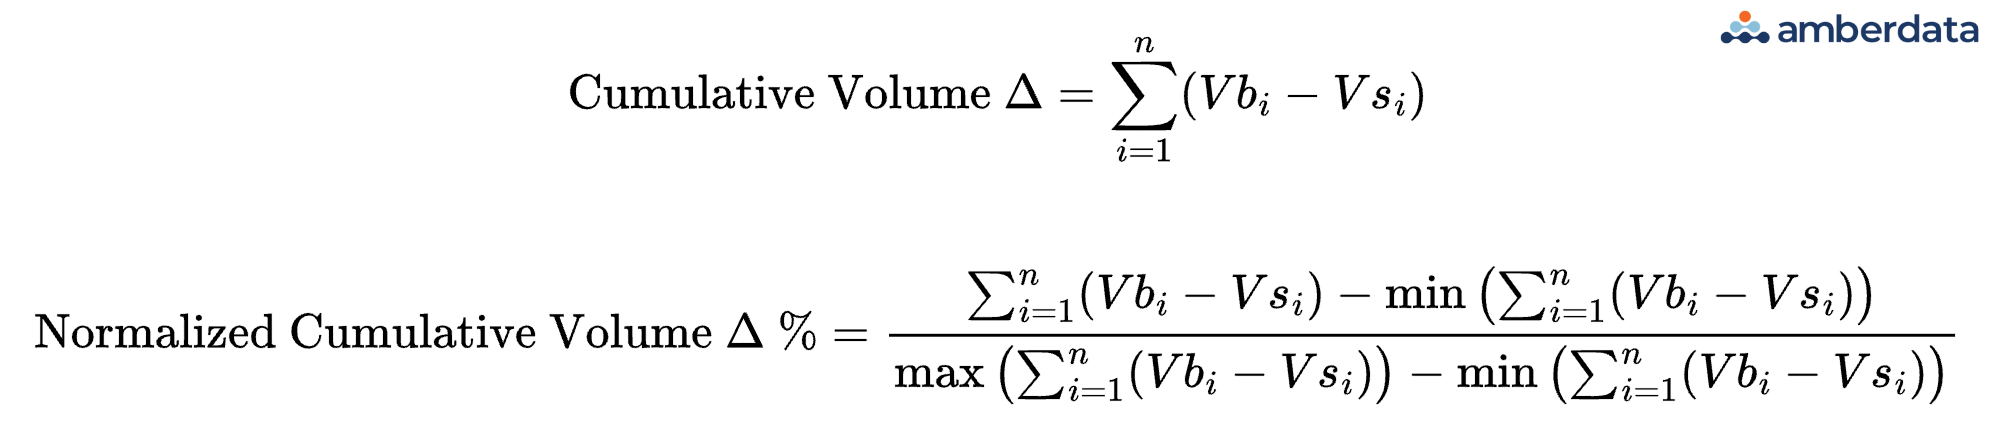 amberdata cumulative volume delta and normalized cumulative volume delta percentage calculation